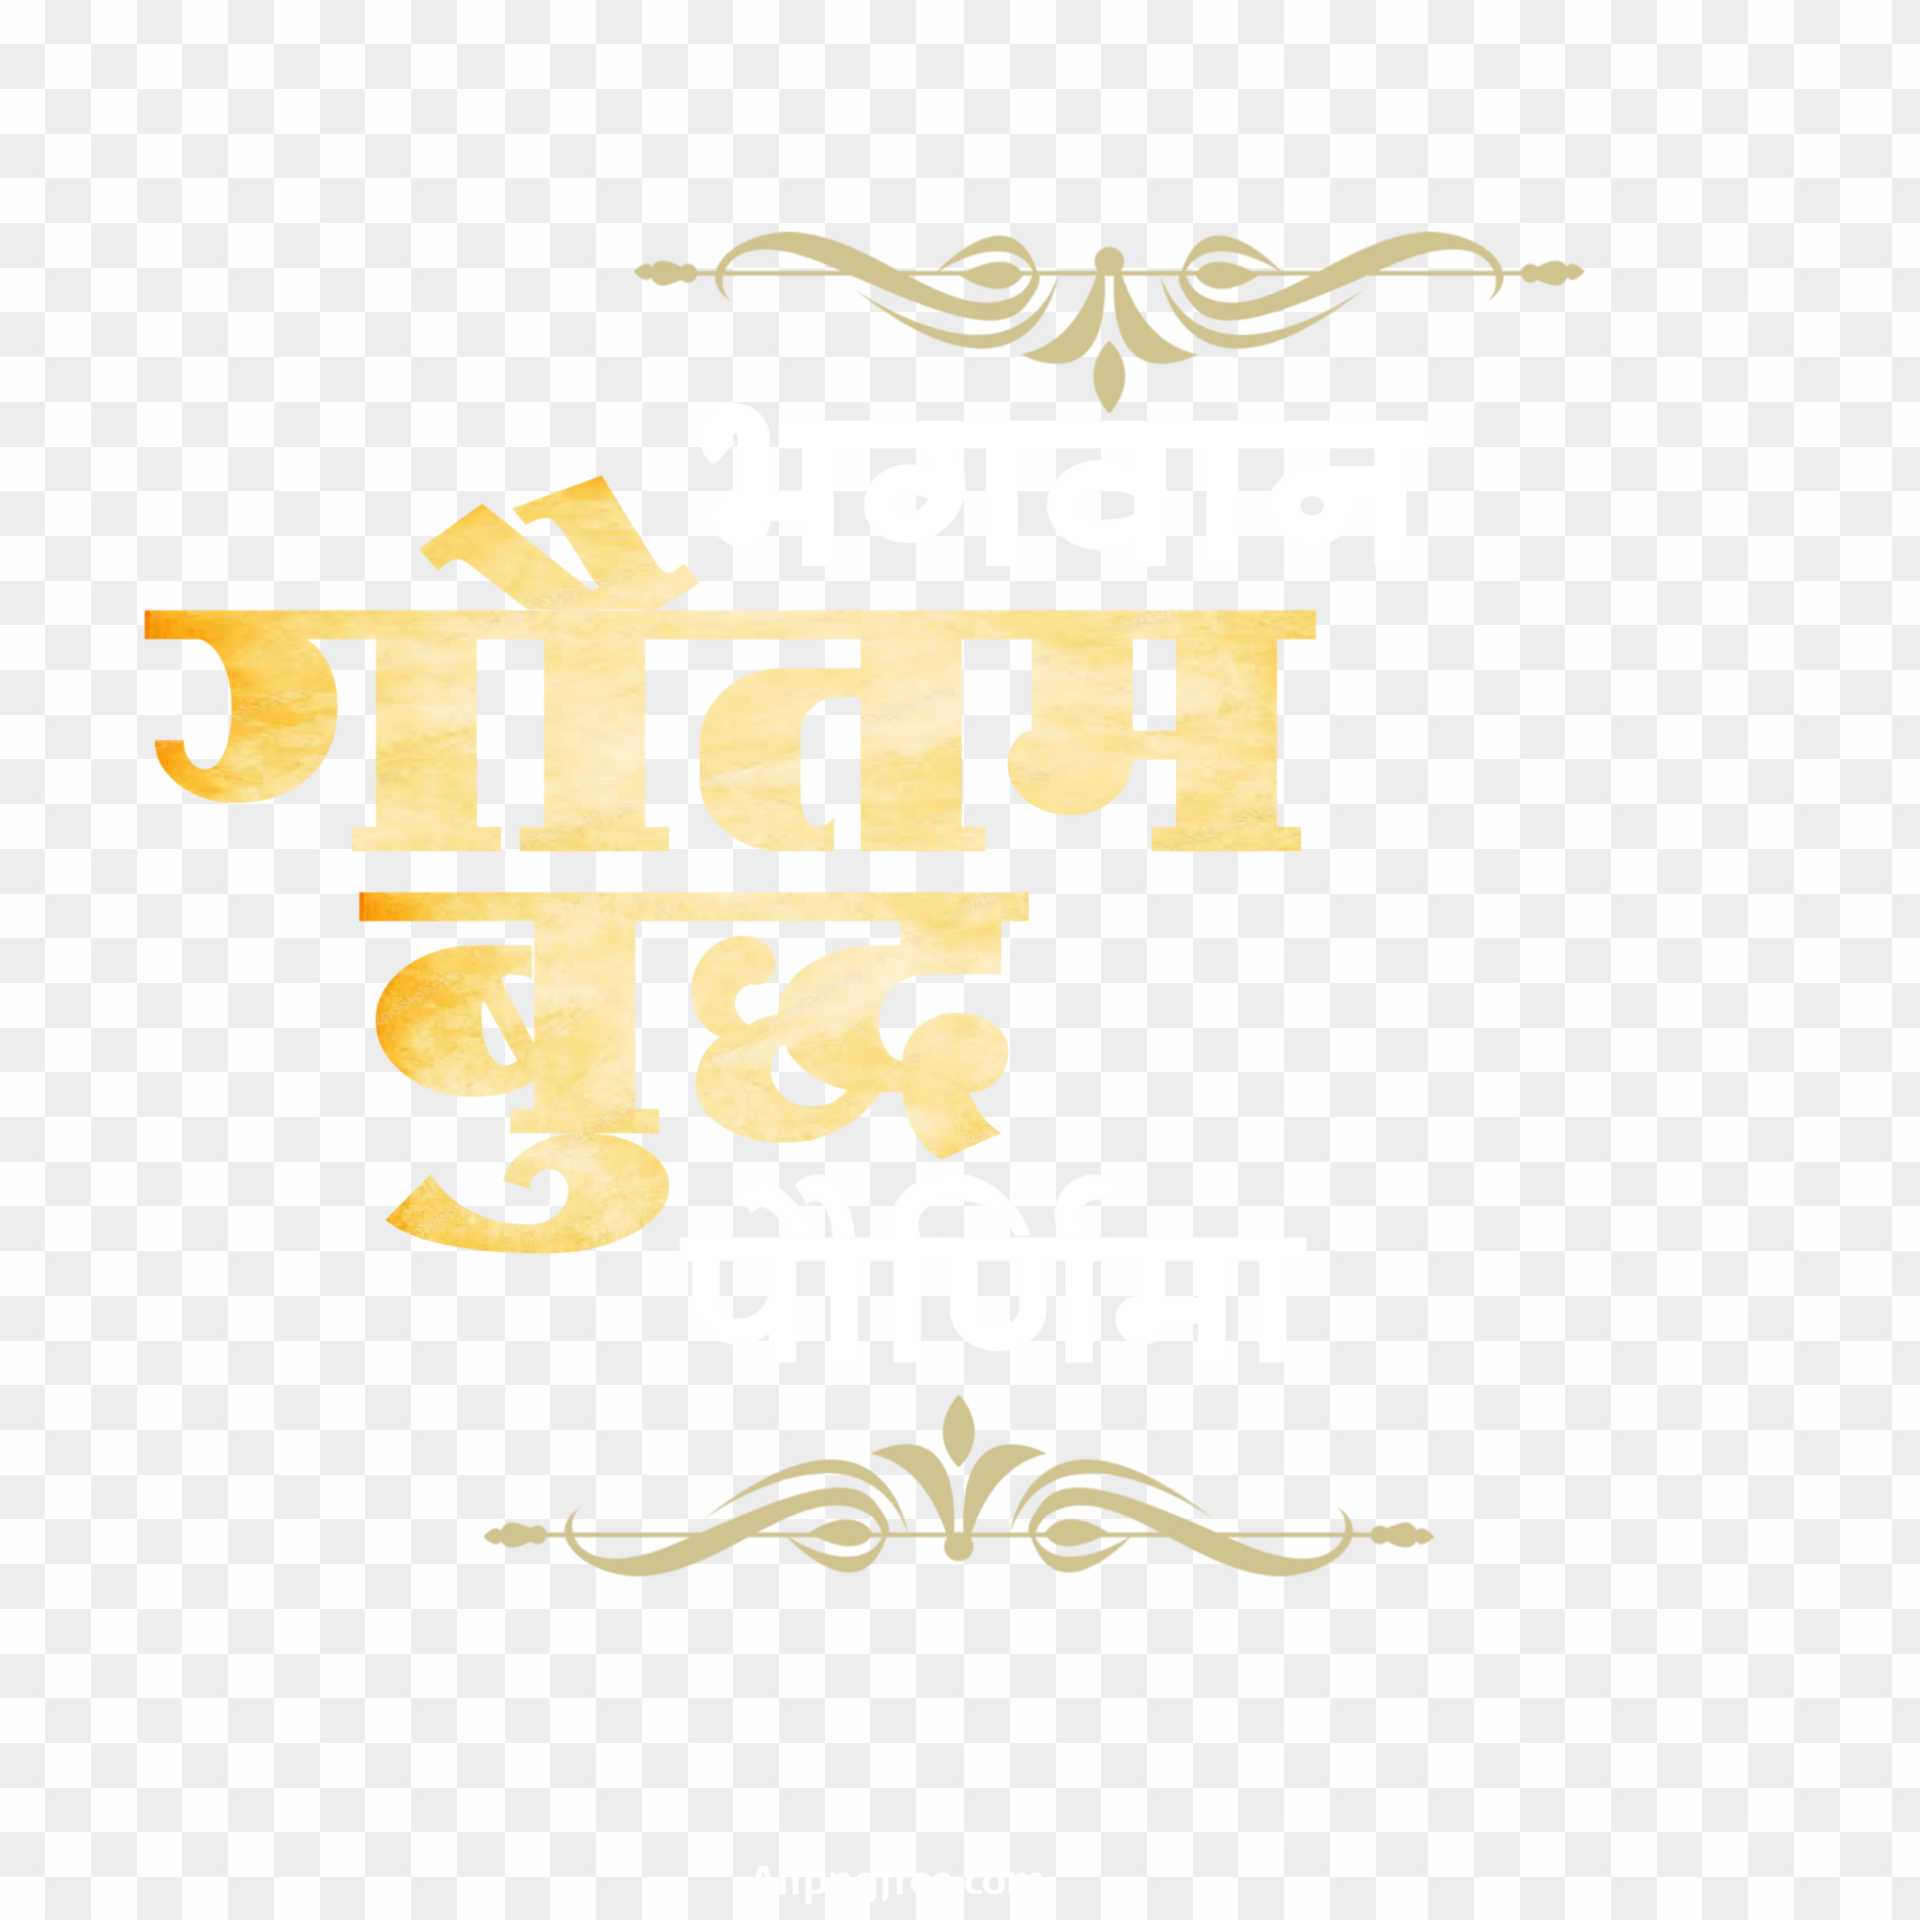 Gautam Buddh Hindi text PNG images download